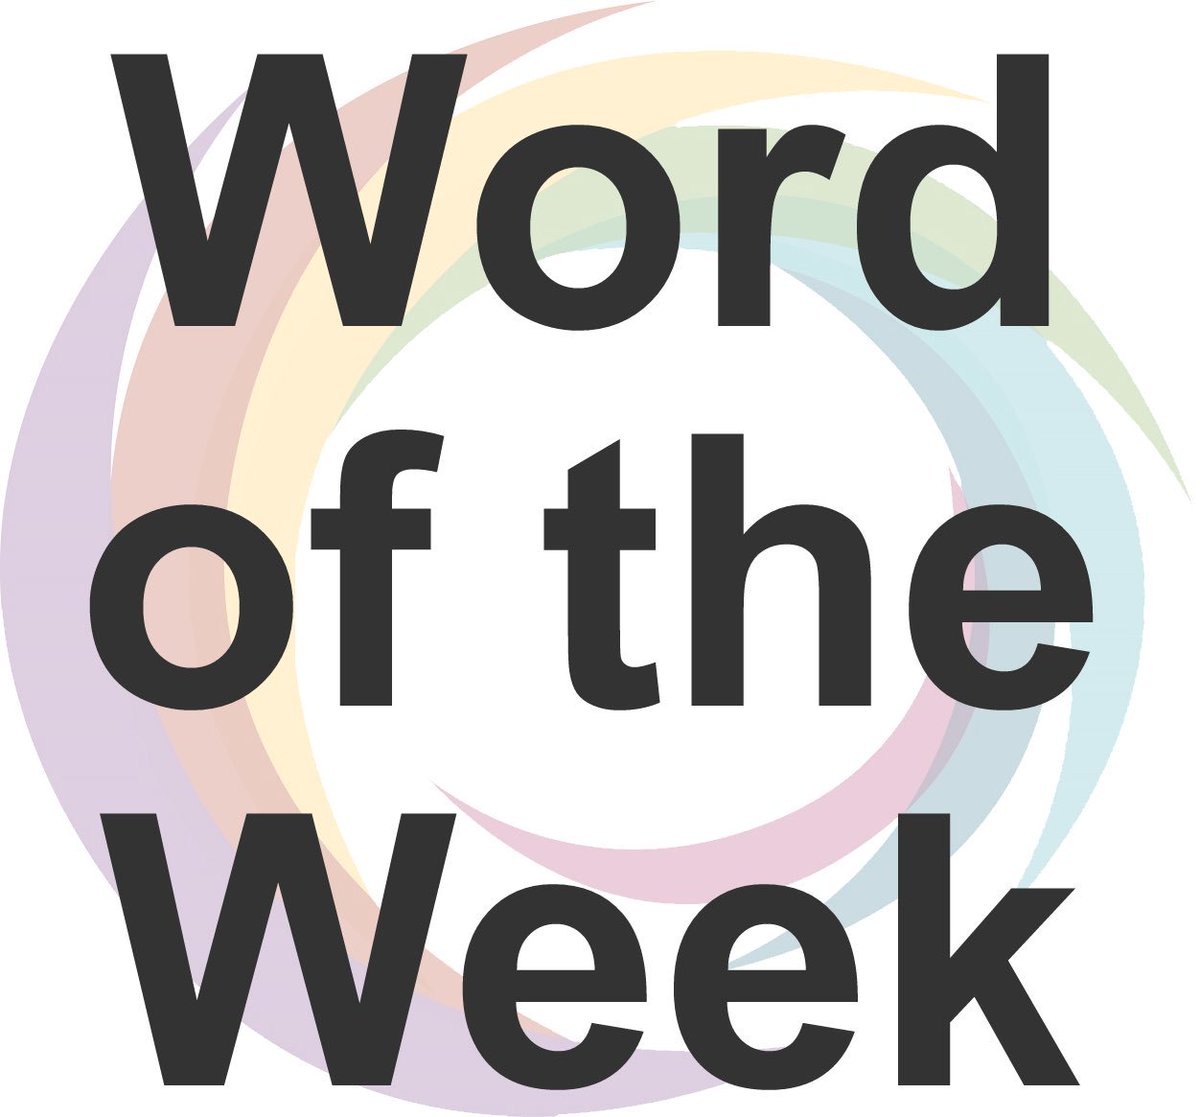 Return of Word of the week and Idiom of the week starts tomorrow! #vocabularymatters #improvinglanguage #Englishskills